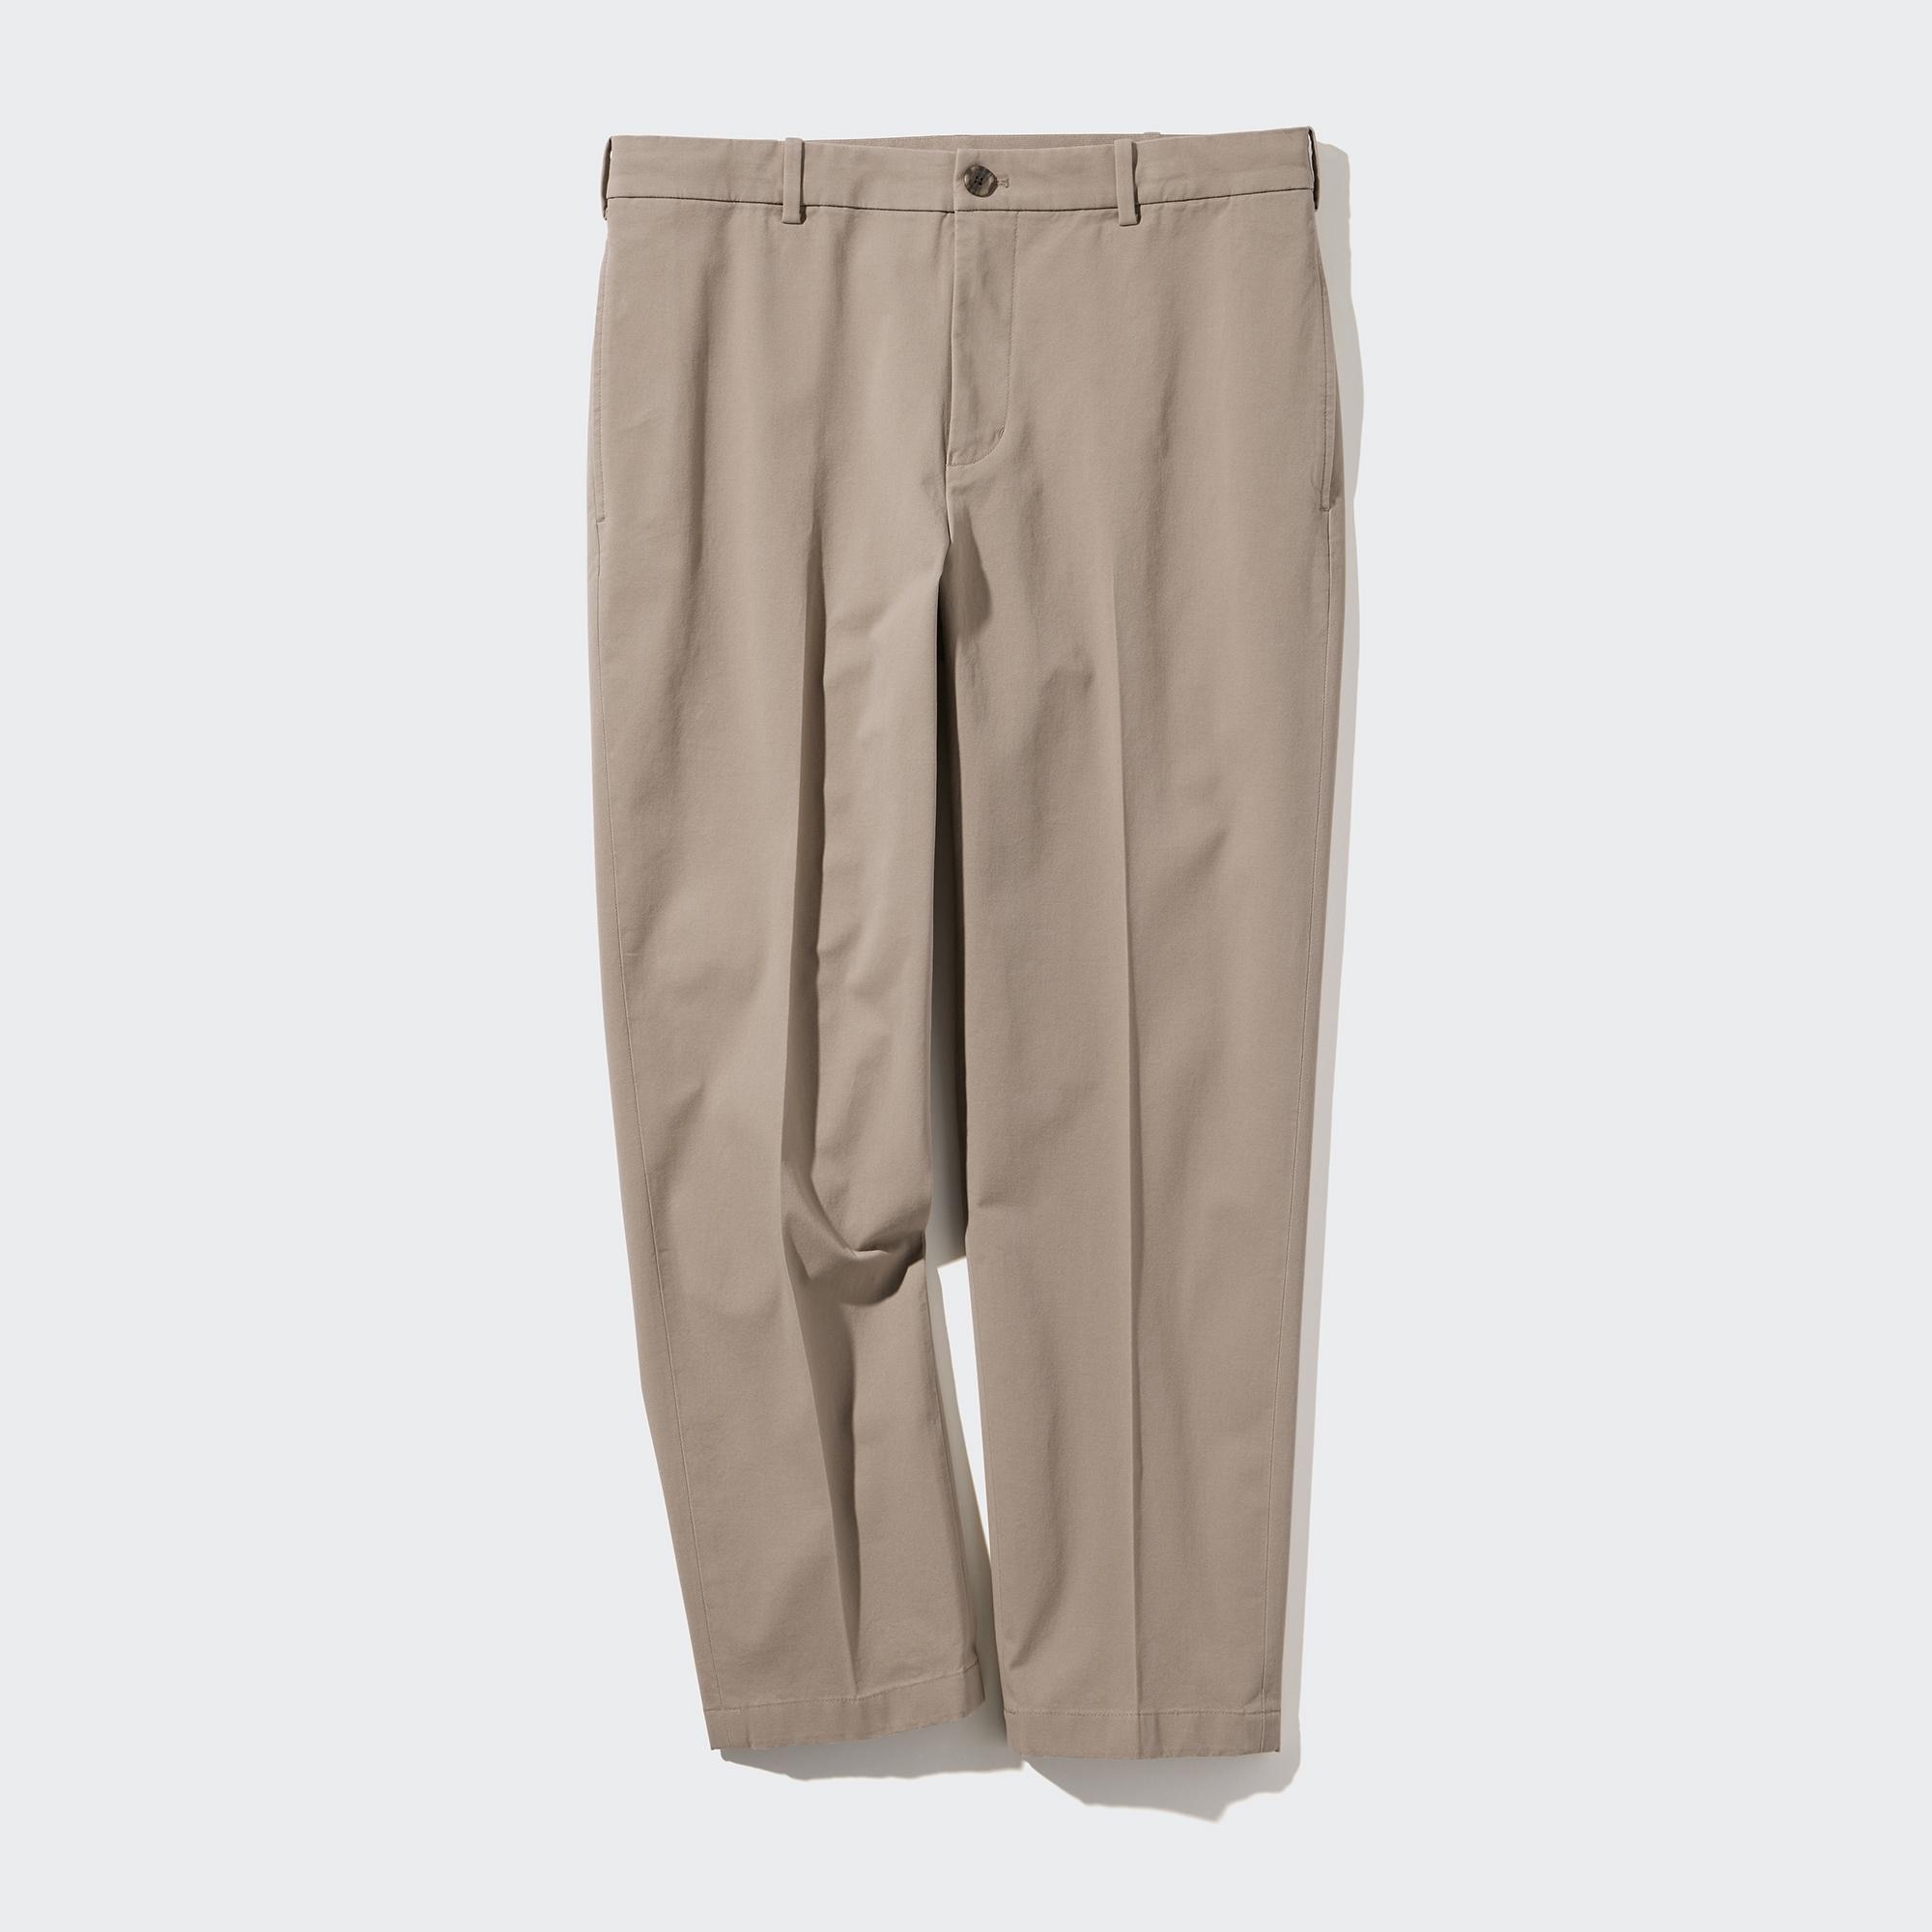 UNIQLO Smart Comfort Cotton Ankle Length Trousers